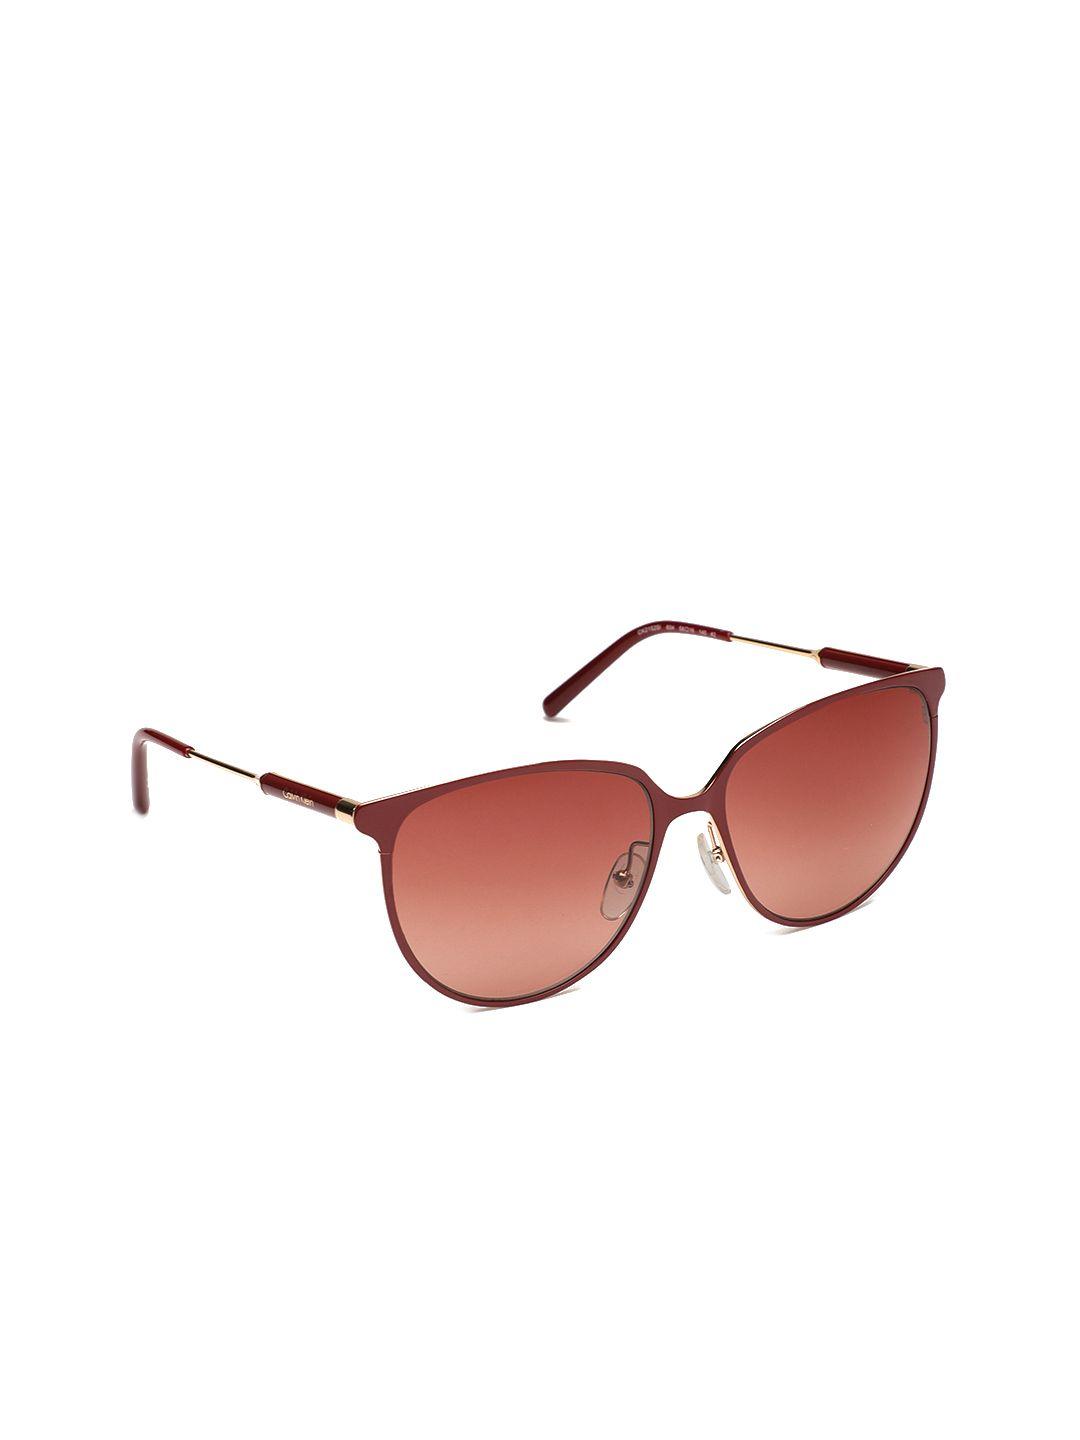 calvin-klein-women-cateye-sunglasses-ck-2147-001-48-s